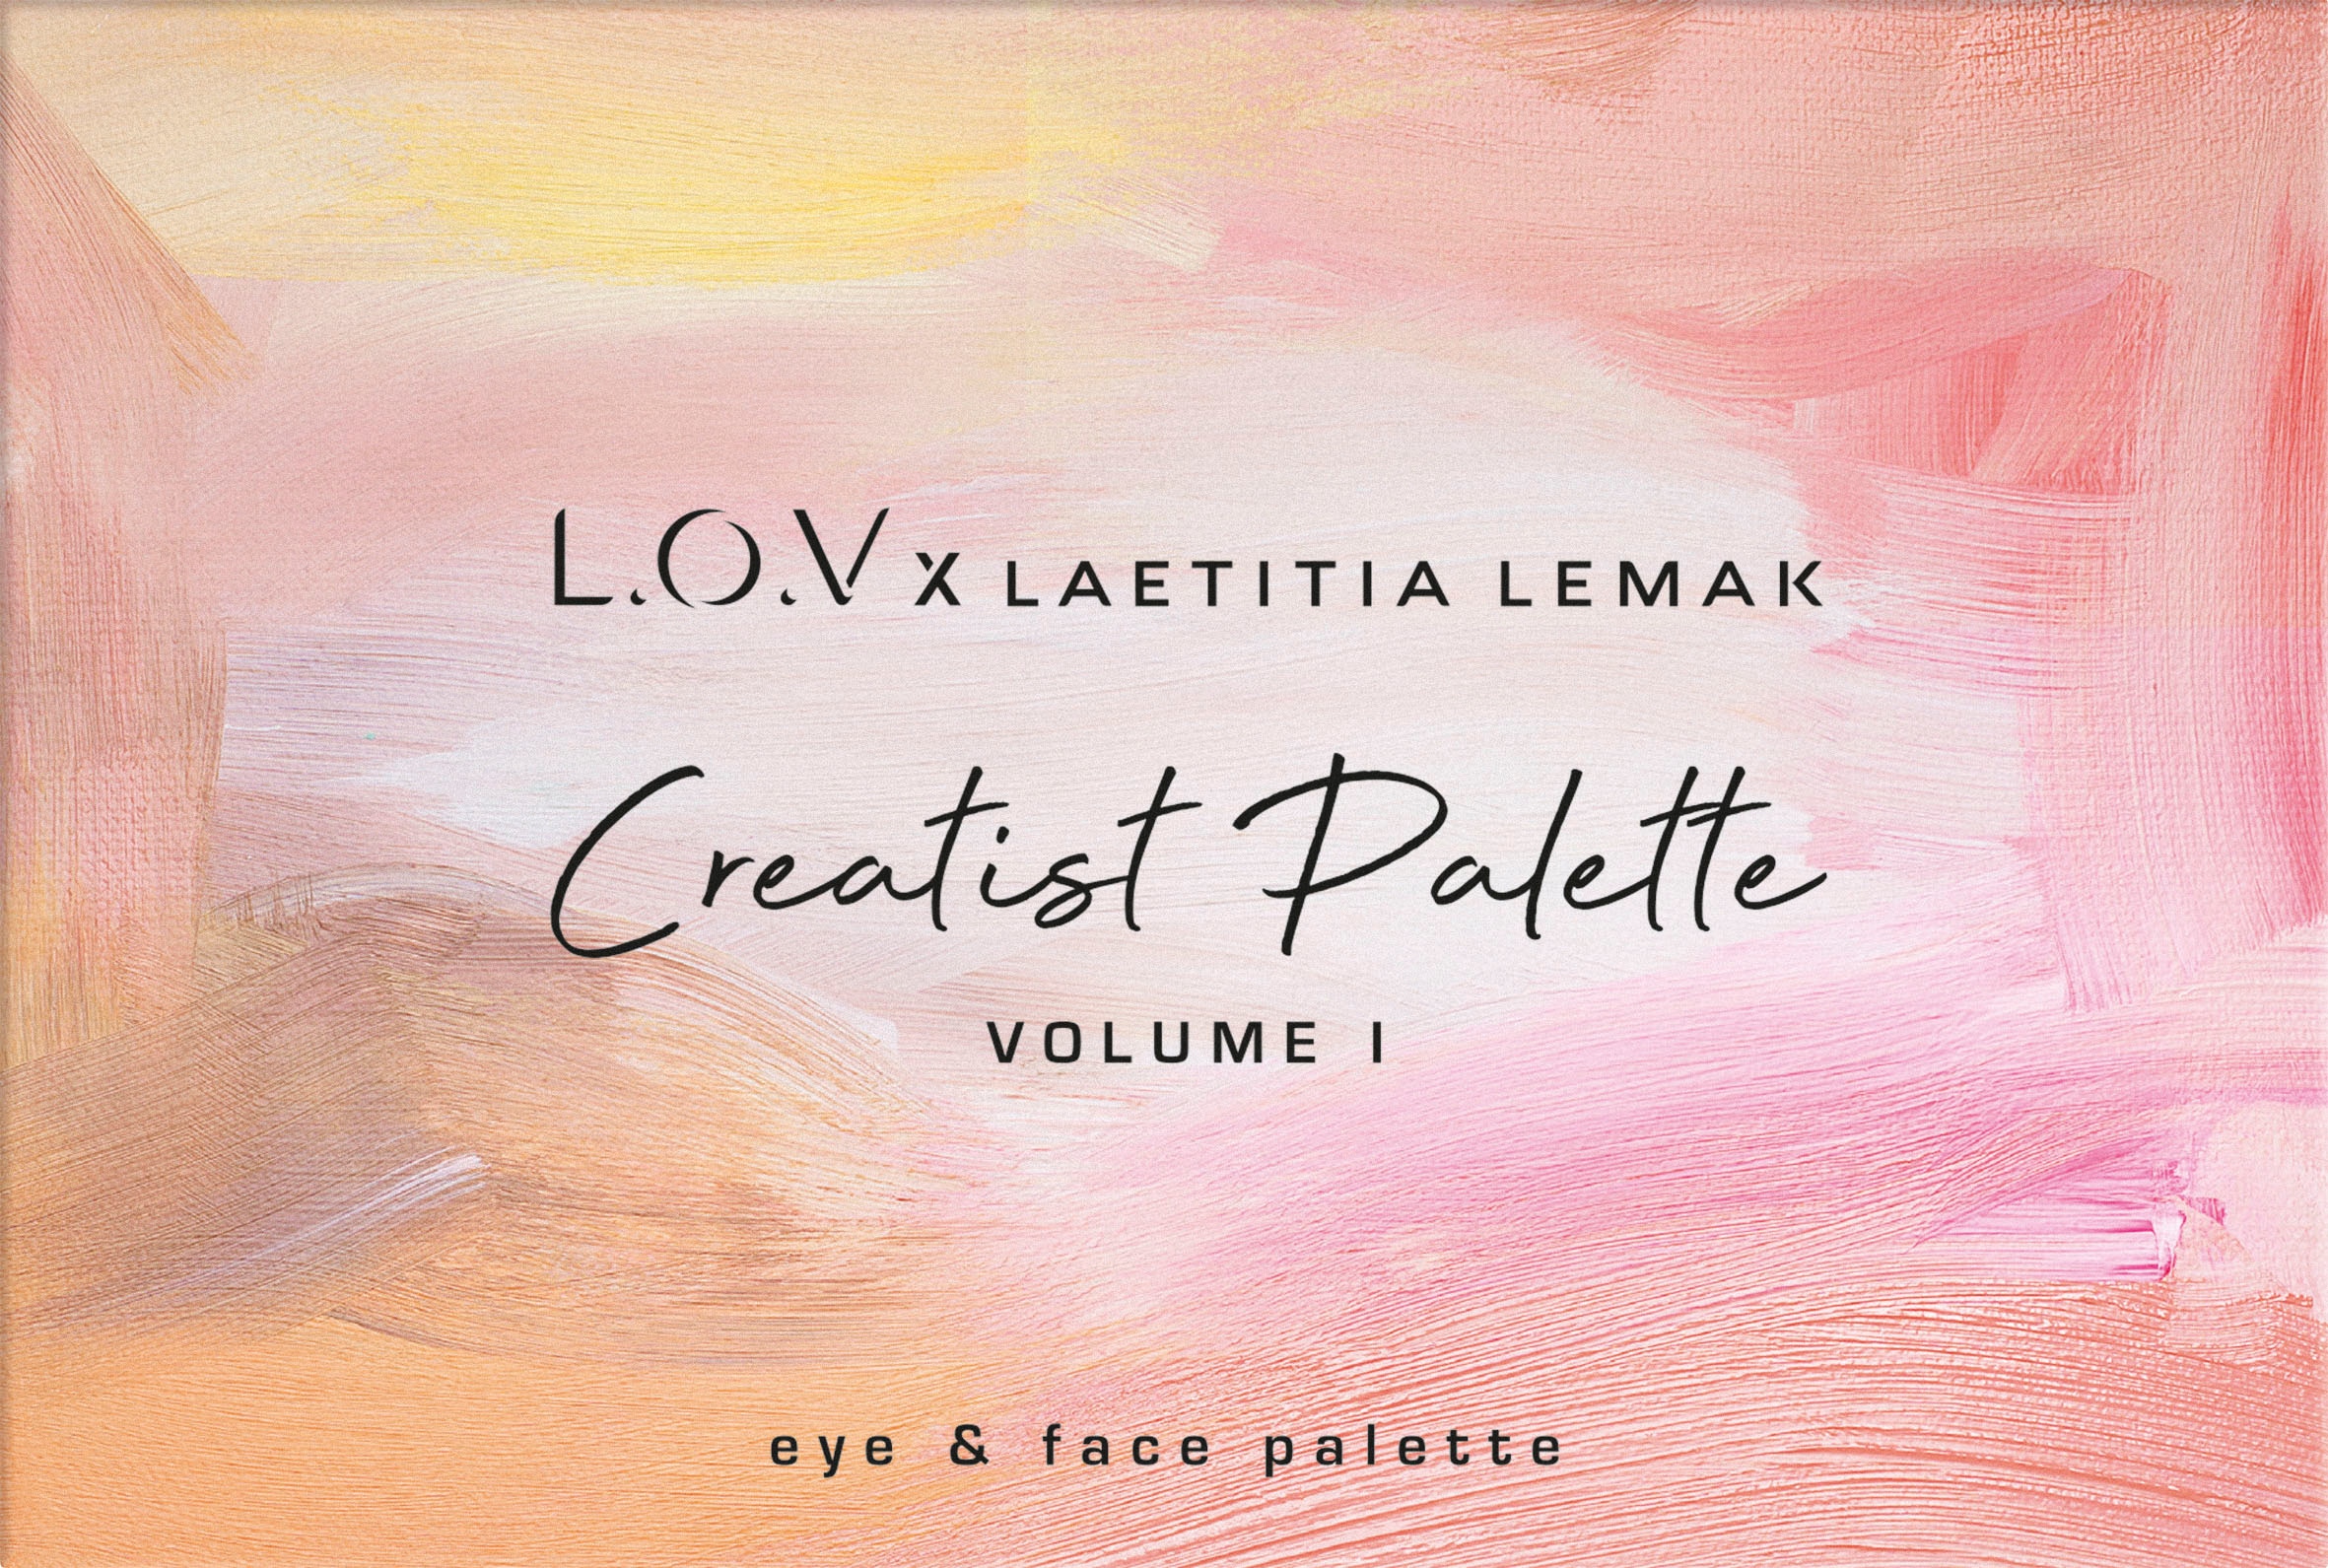 L.O.V Lidschatten-Palette »L.O.V x LAETITIA LEMAK CREATIST PALETTE Volume I  eye & face palette« kaufen bei OTTO